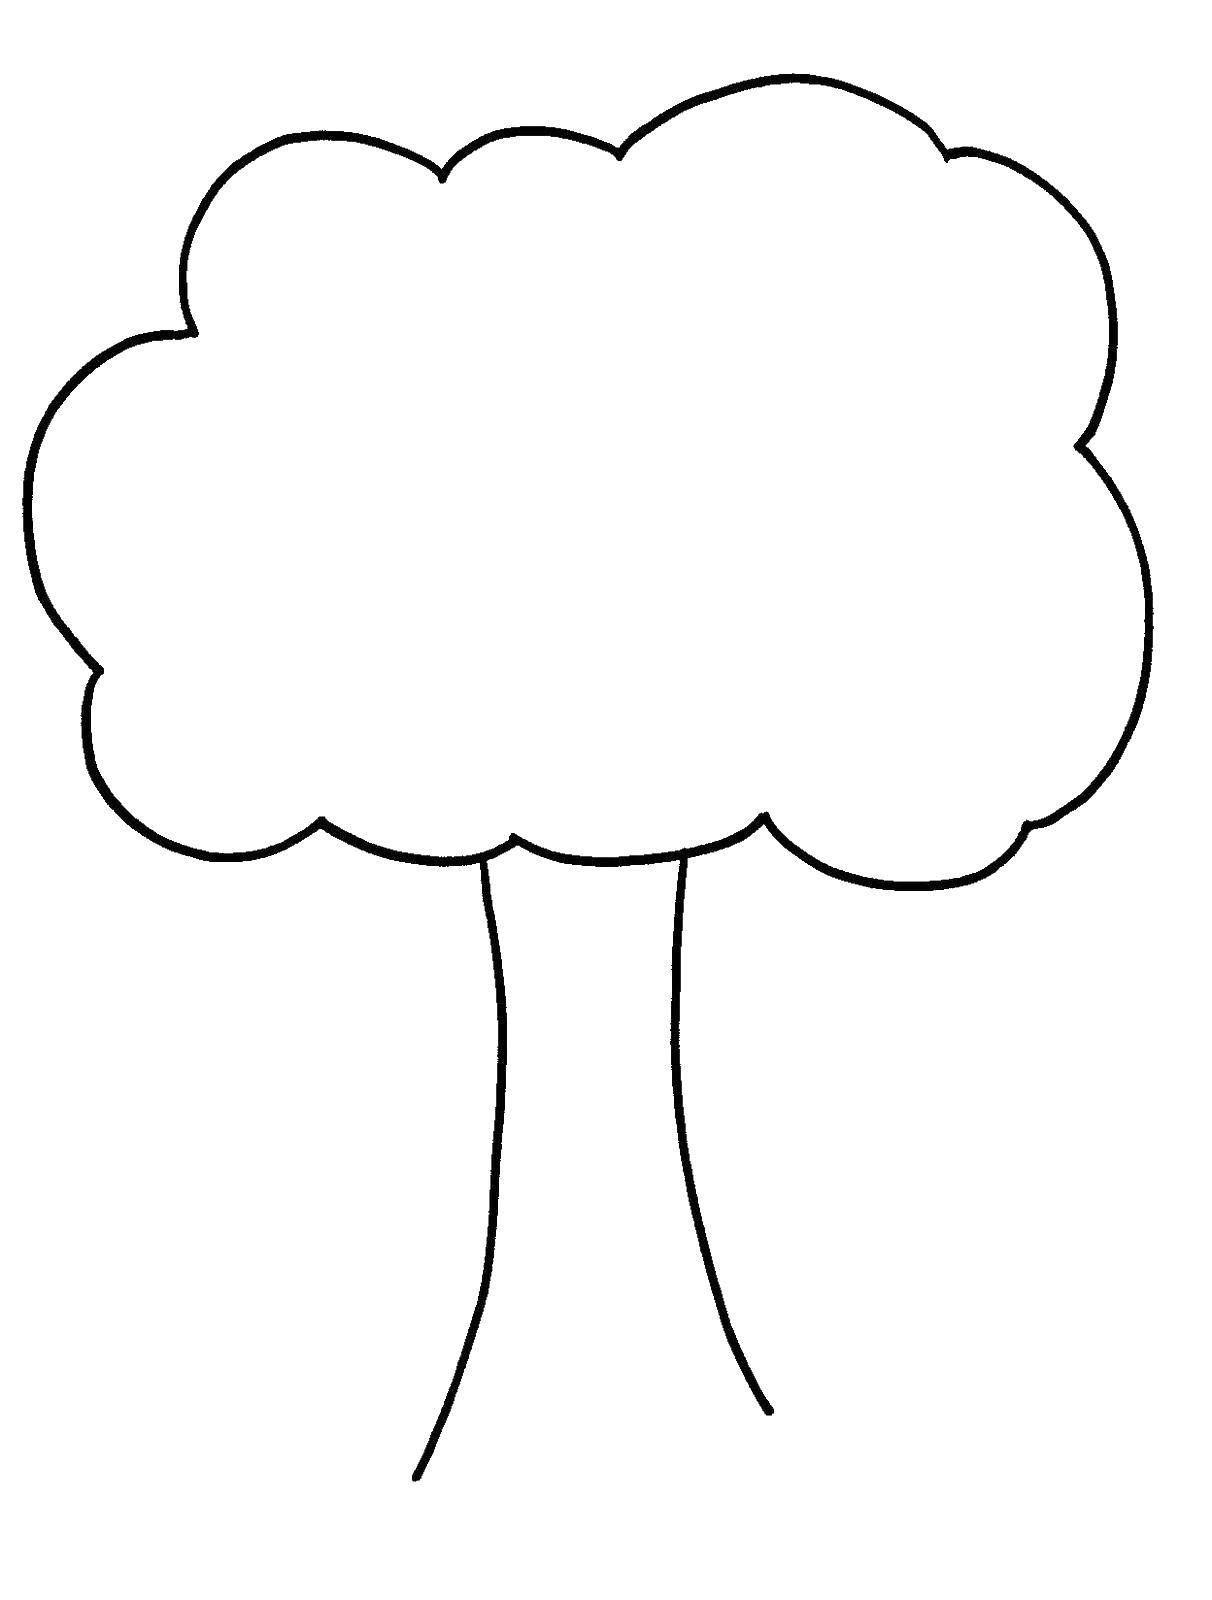 Название: Раскраска Контур деревца.. Категория: Контур дерева. Теги: Деревья, лист.